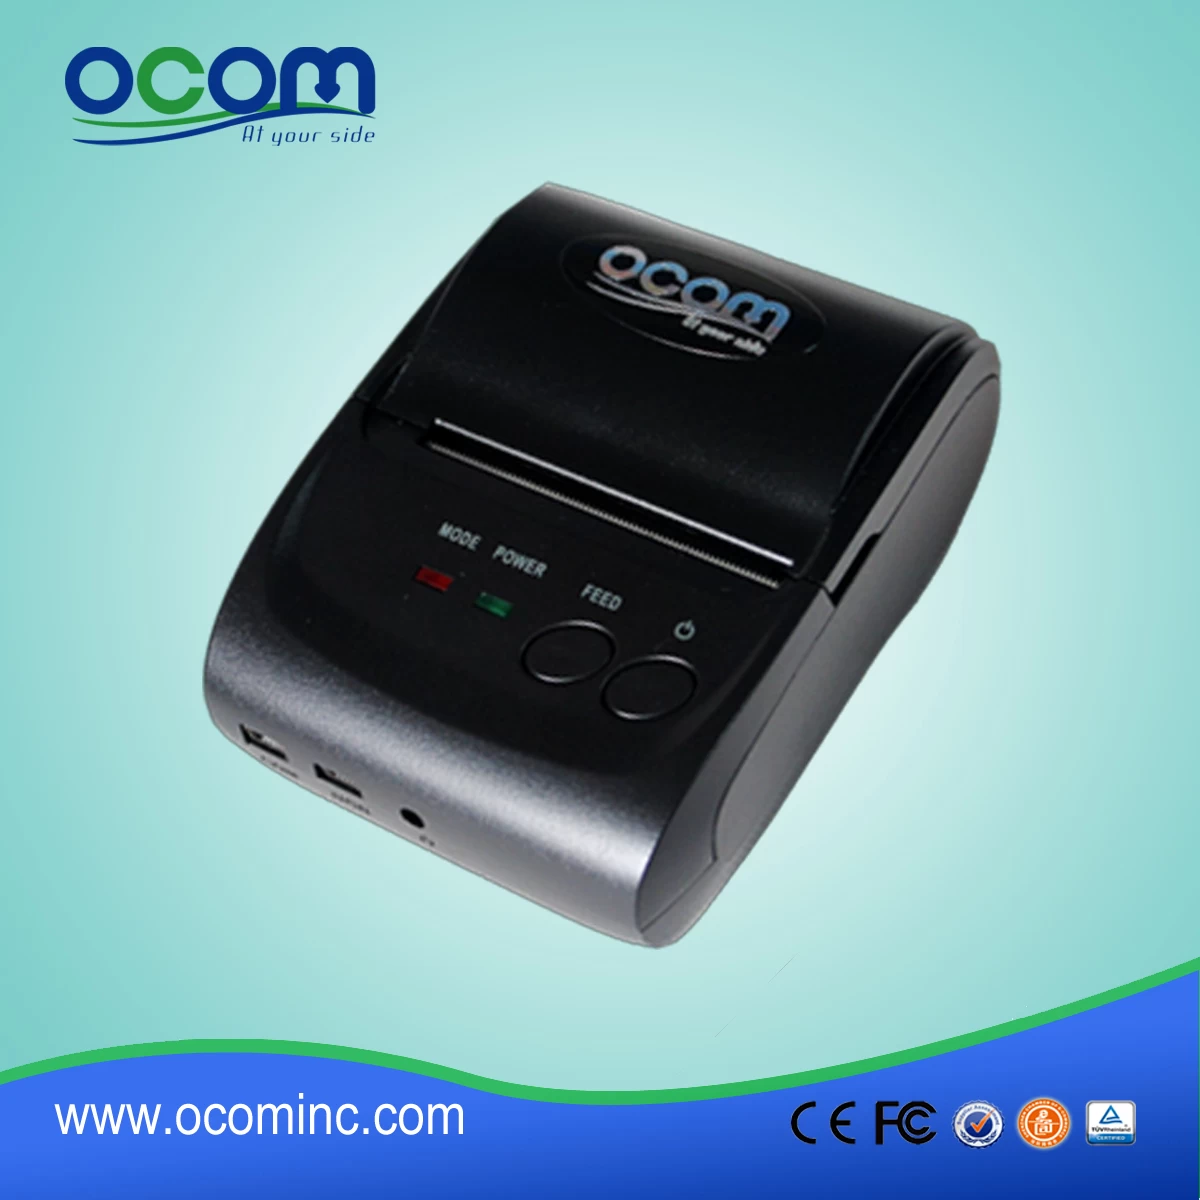 New Mobile Bluetooth Thermal Printer OCPP- M05